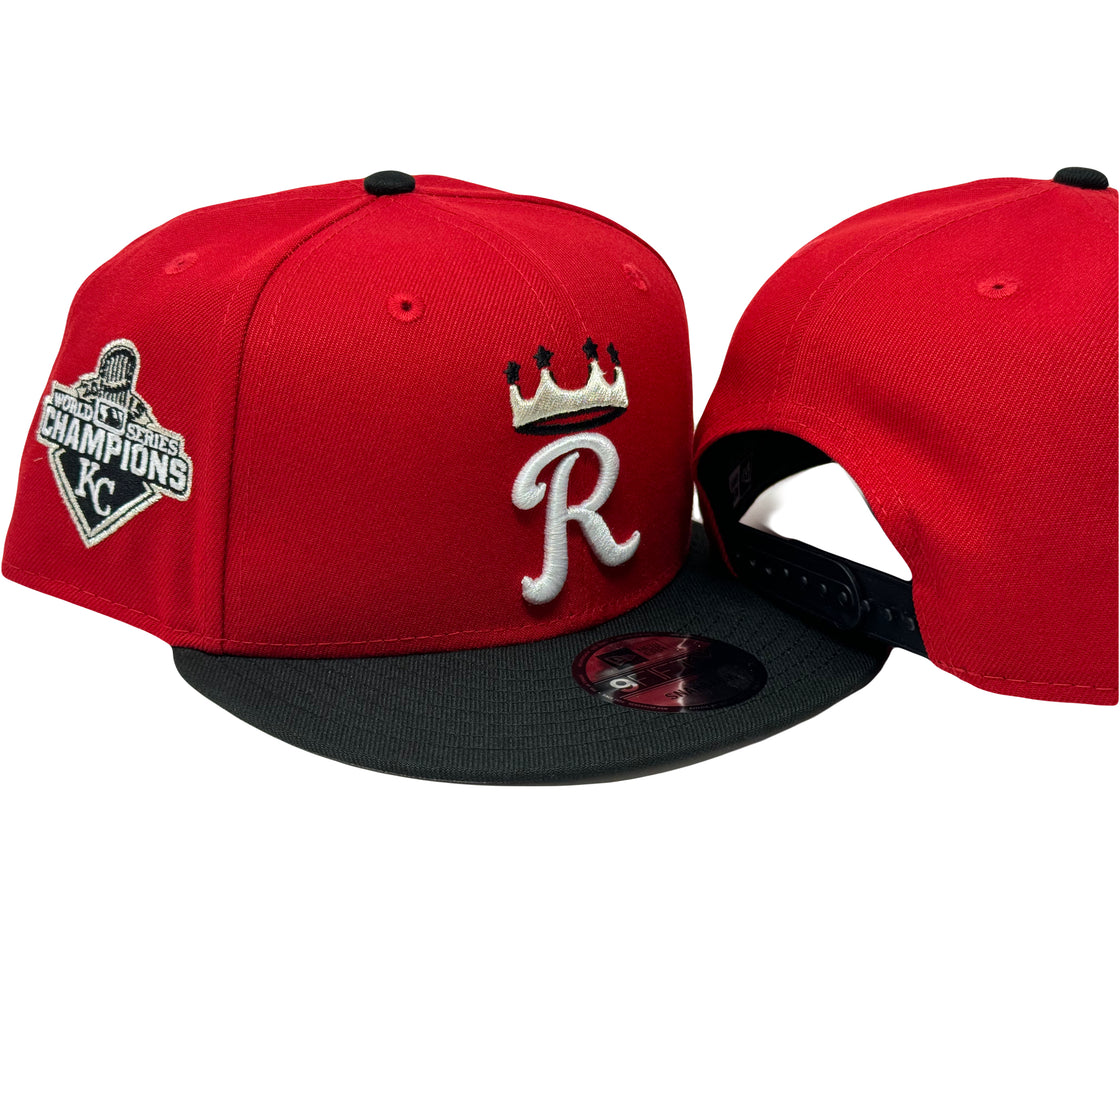 Kansas City Royals 2015 World Series Champions 950 New Era Snapback Hat